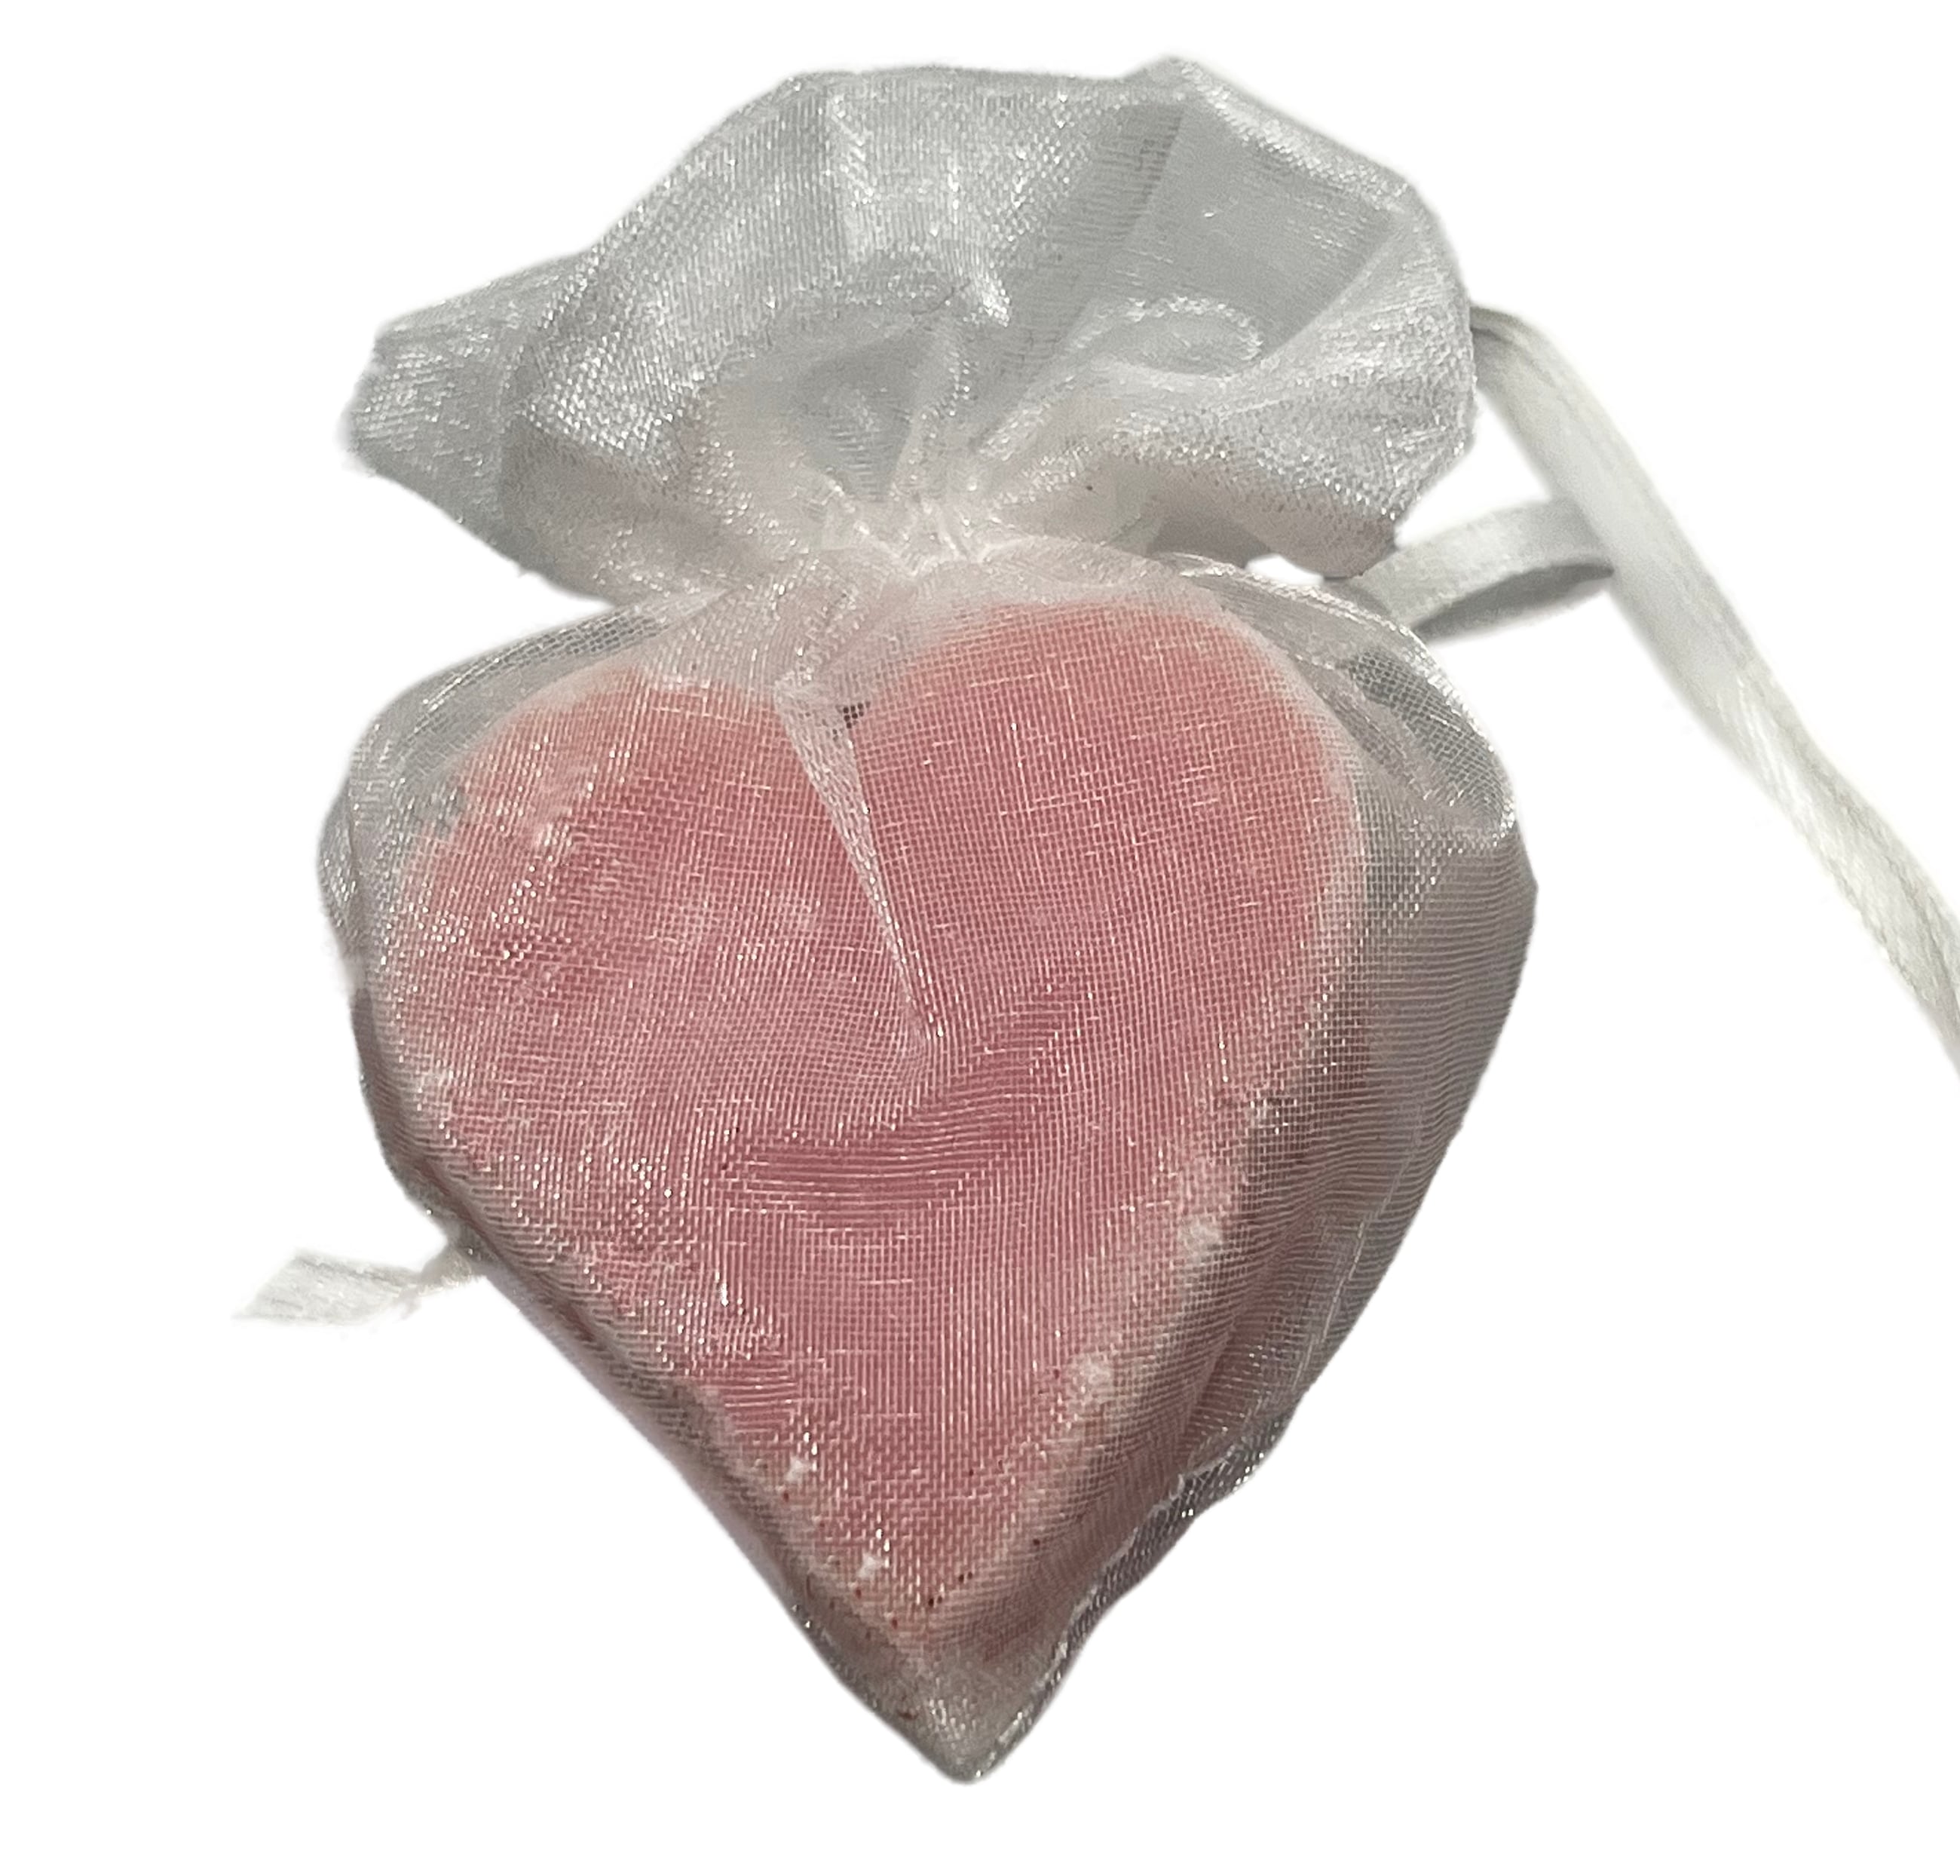 Tiny Rose Heart Soap in Organza Bag